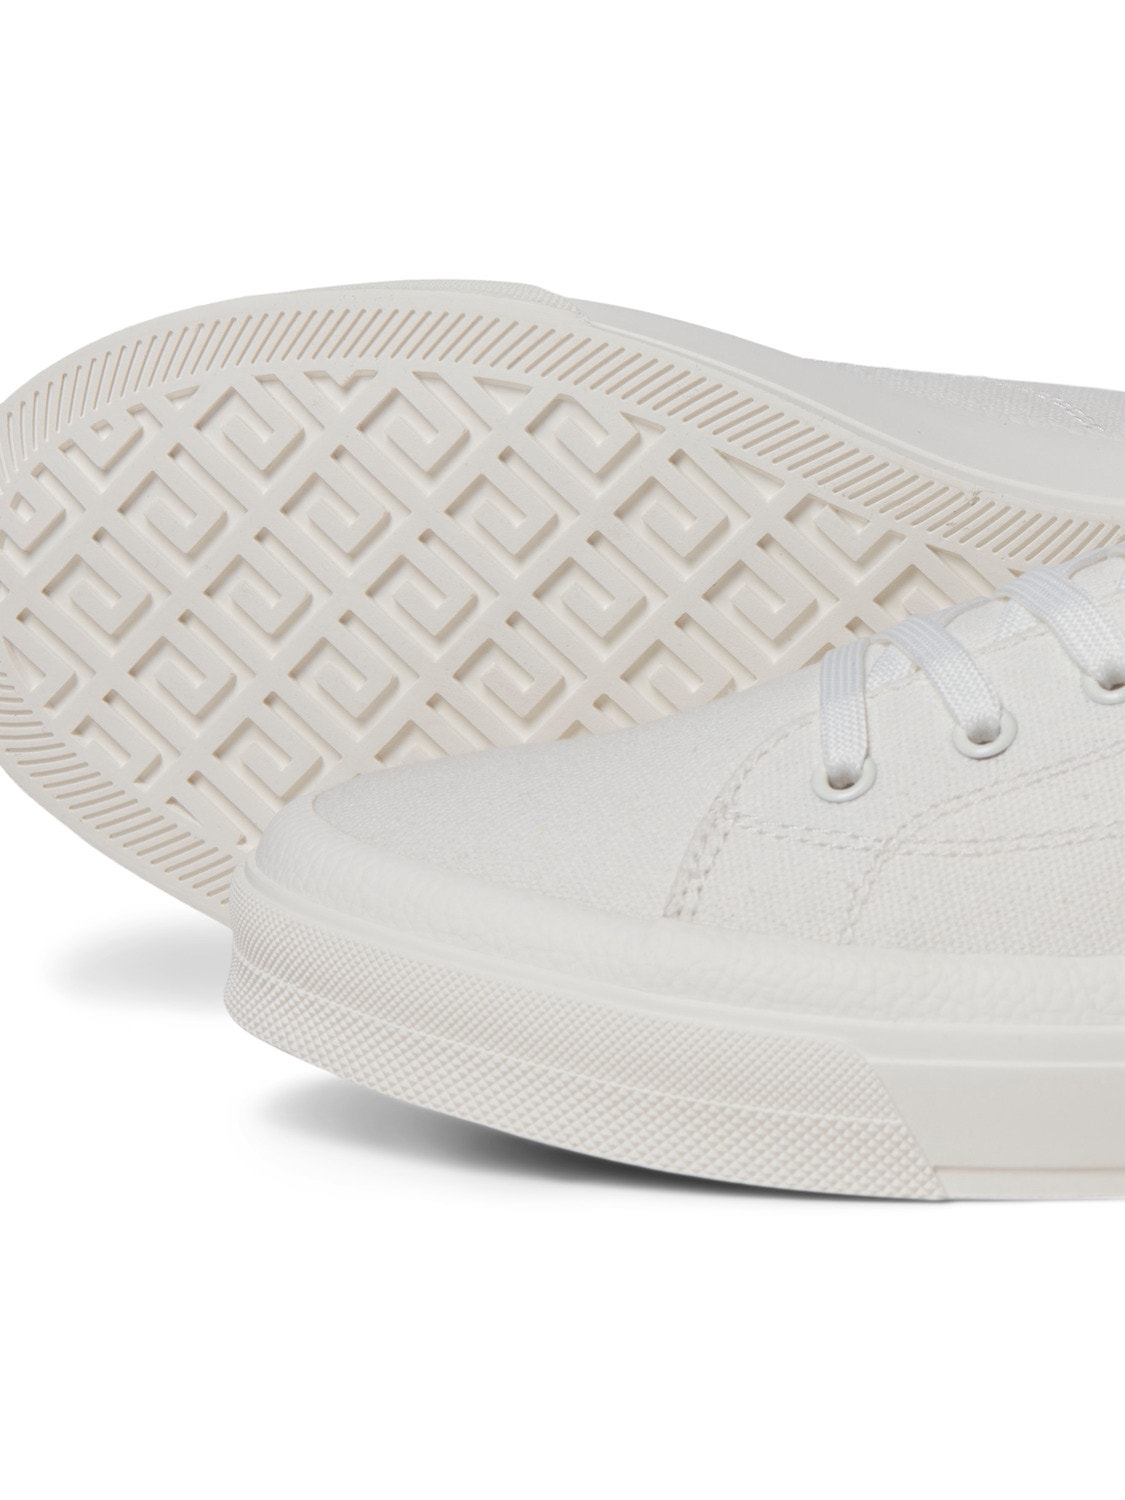 Jack & Jones Canvas Sneakers -Bright White - 12257195